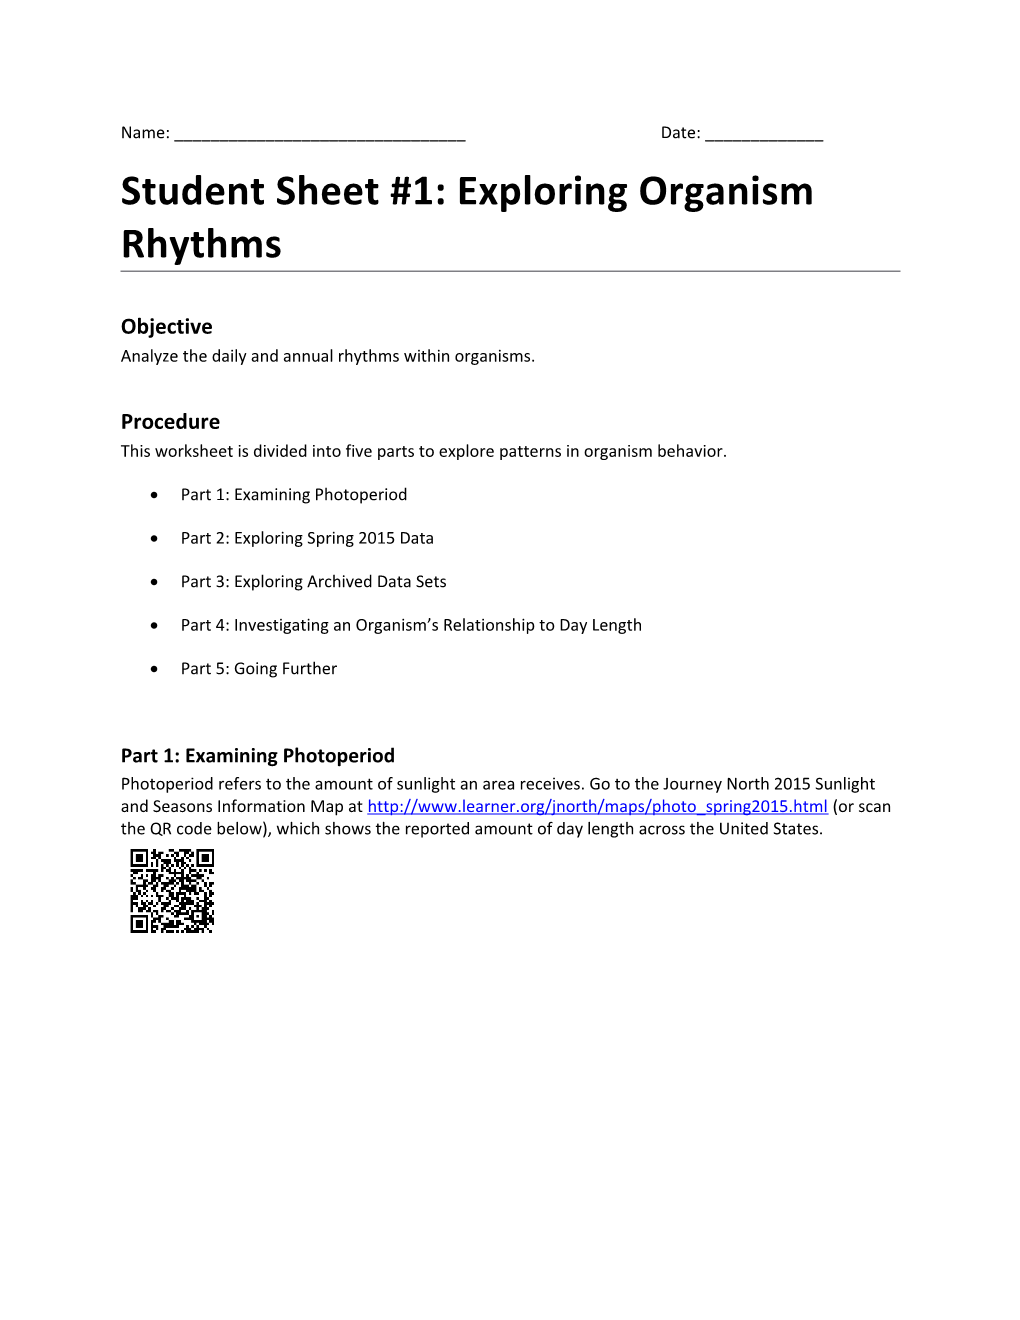 Student Sheet #1: Exploring Organism Rhythms